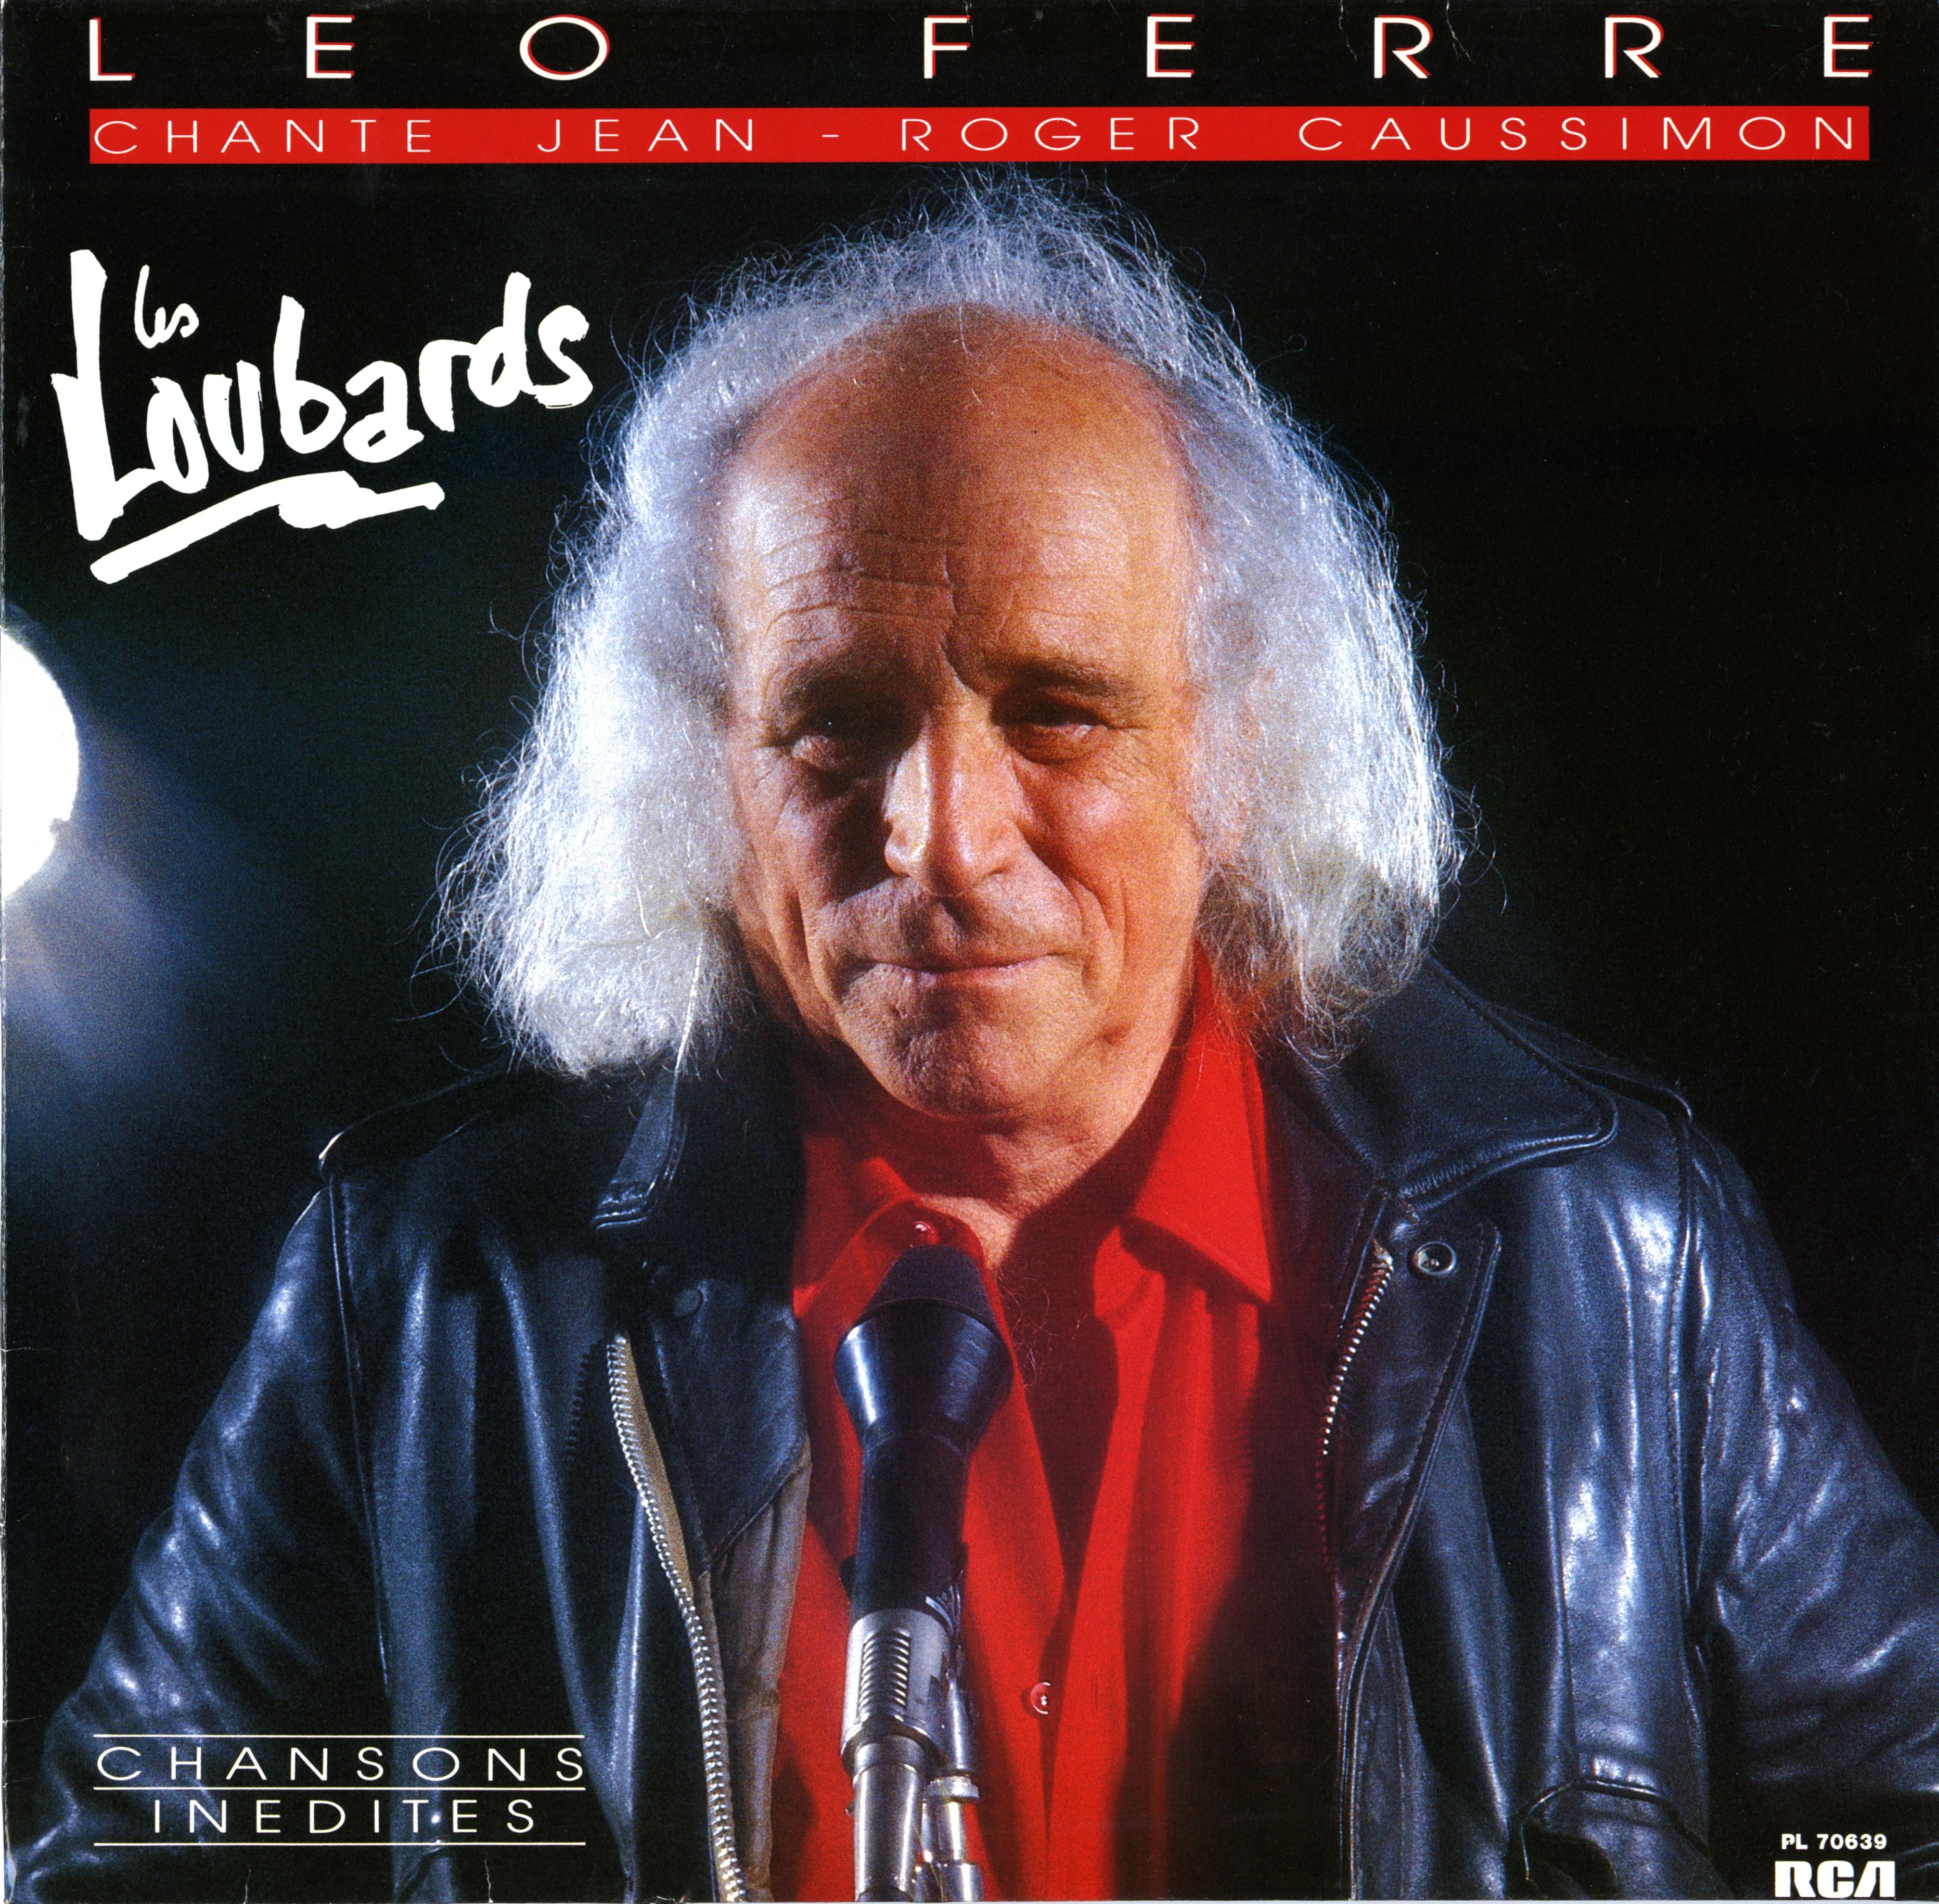 Léo Ferré - Les loubards, RCA PL 70639